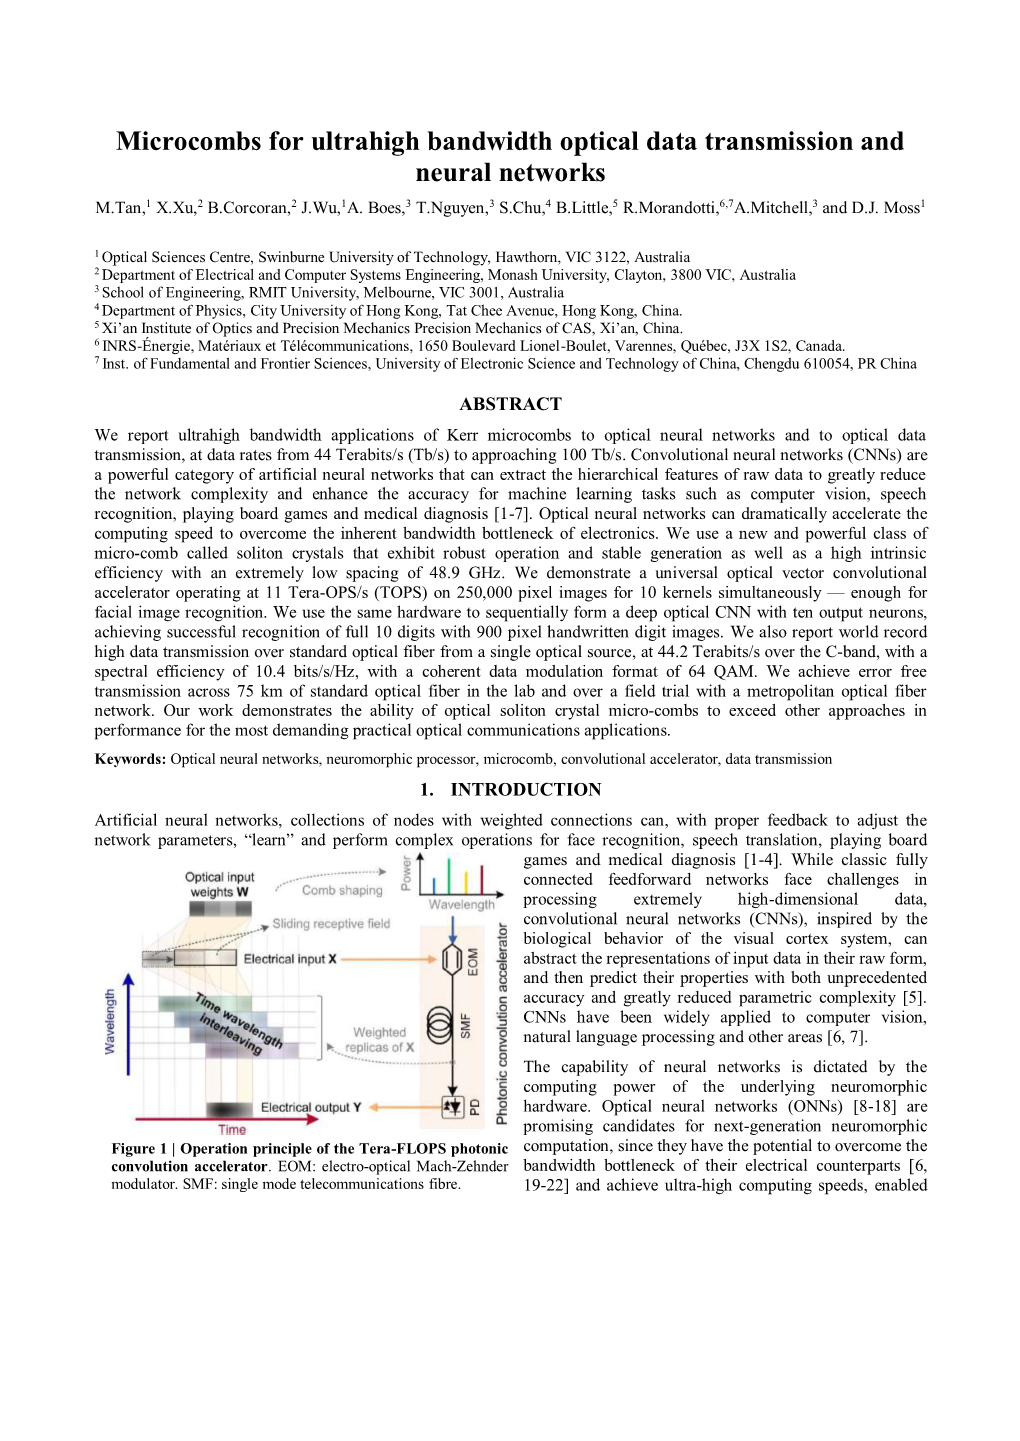 Microcombs for Ultrahigh Bandwidth Optical Data Transmission and Neural Networks M.Tan,1 X.Xu,2 B.Corcoran,2 J.Wu,1A